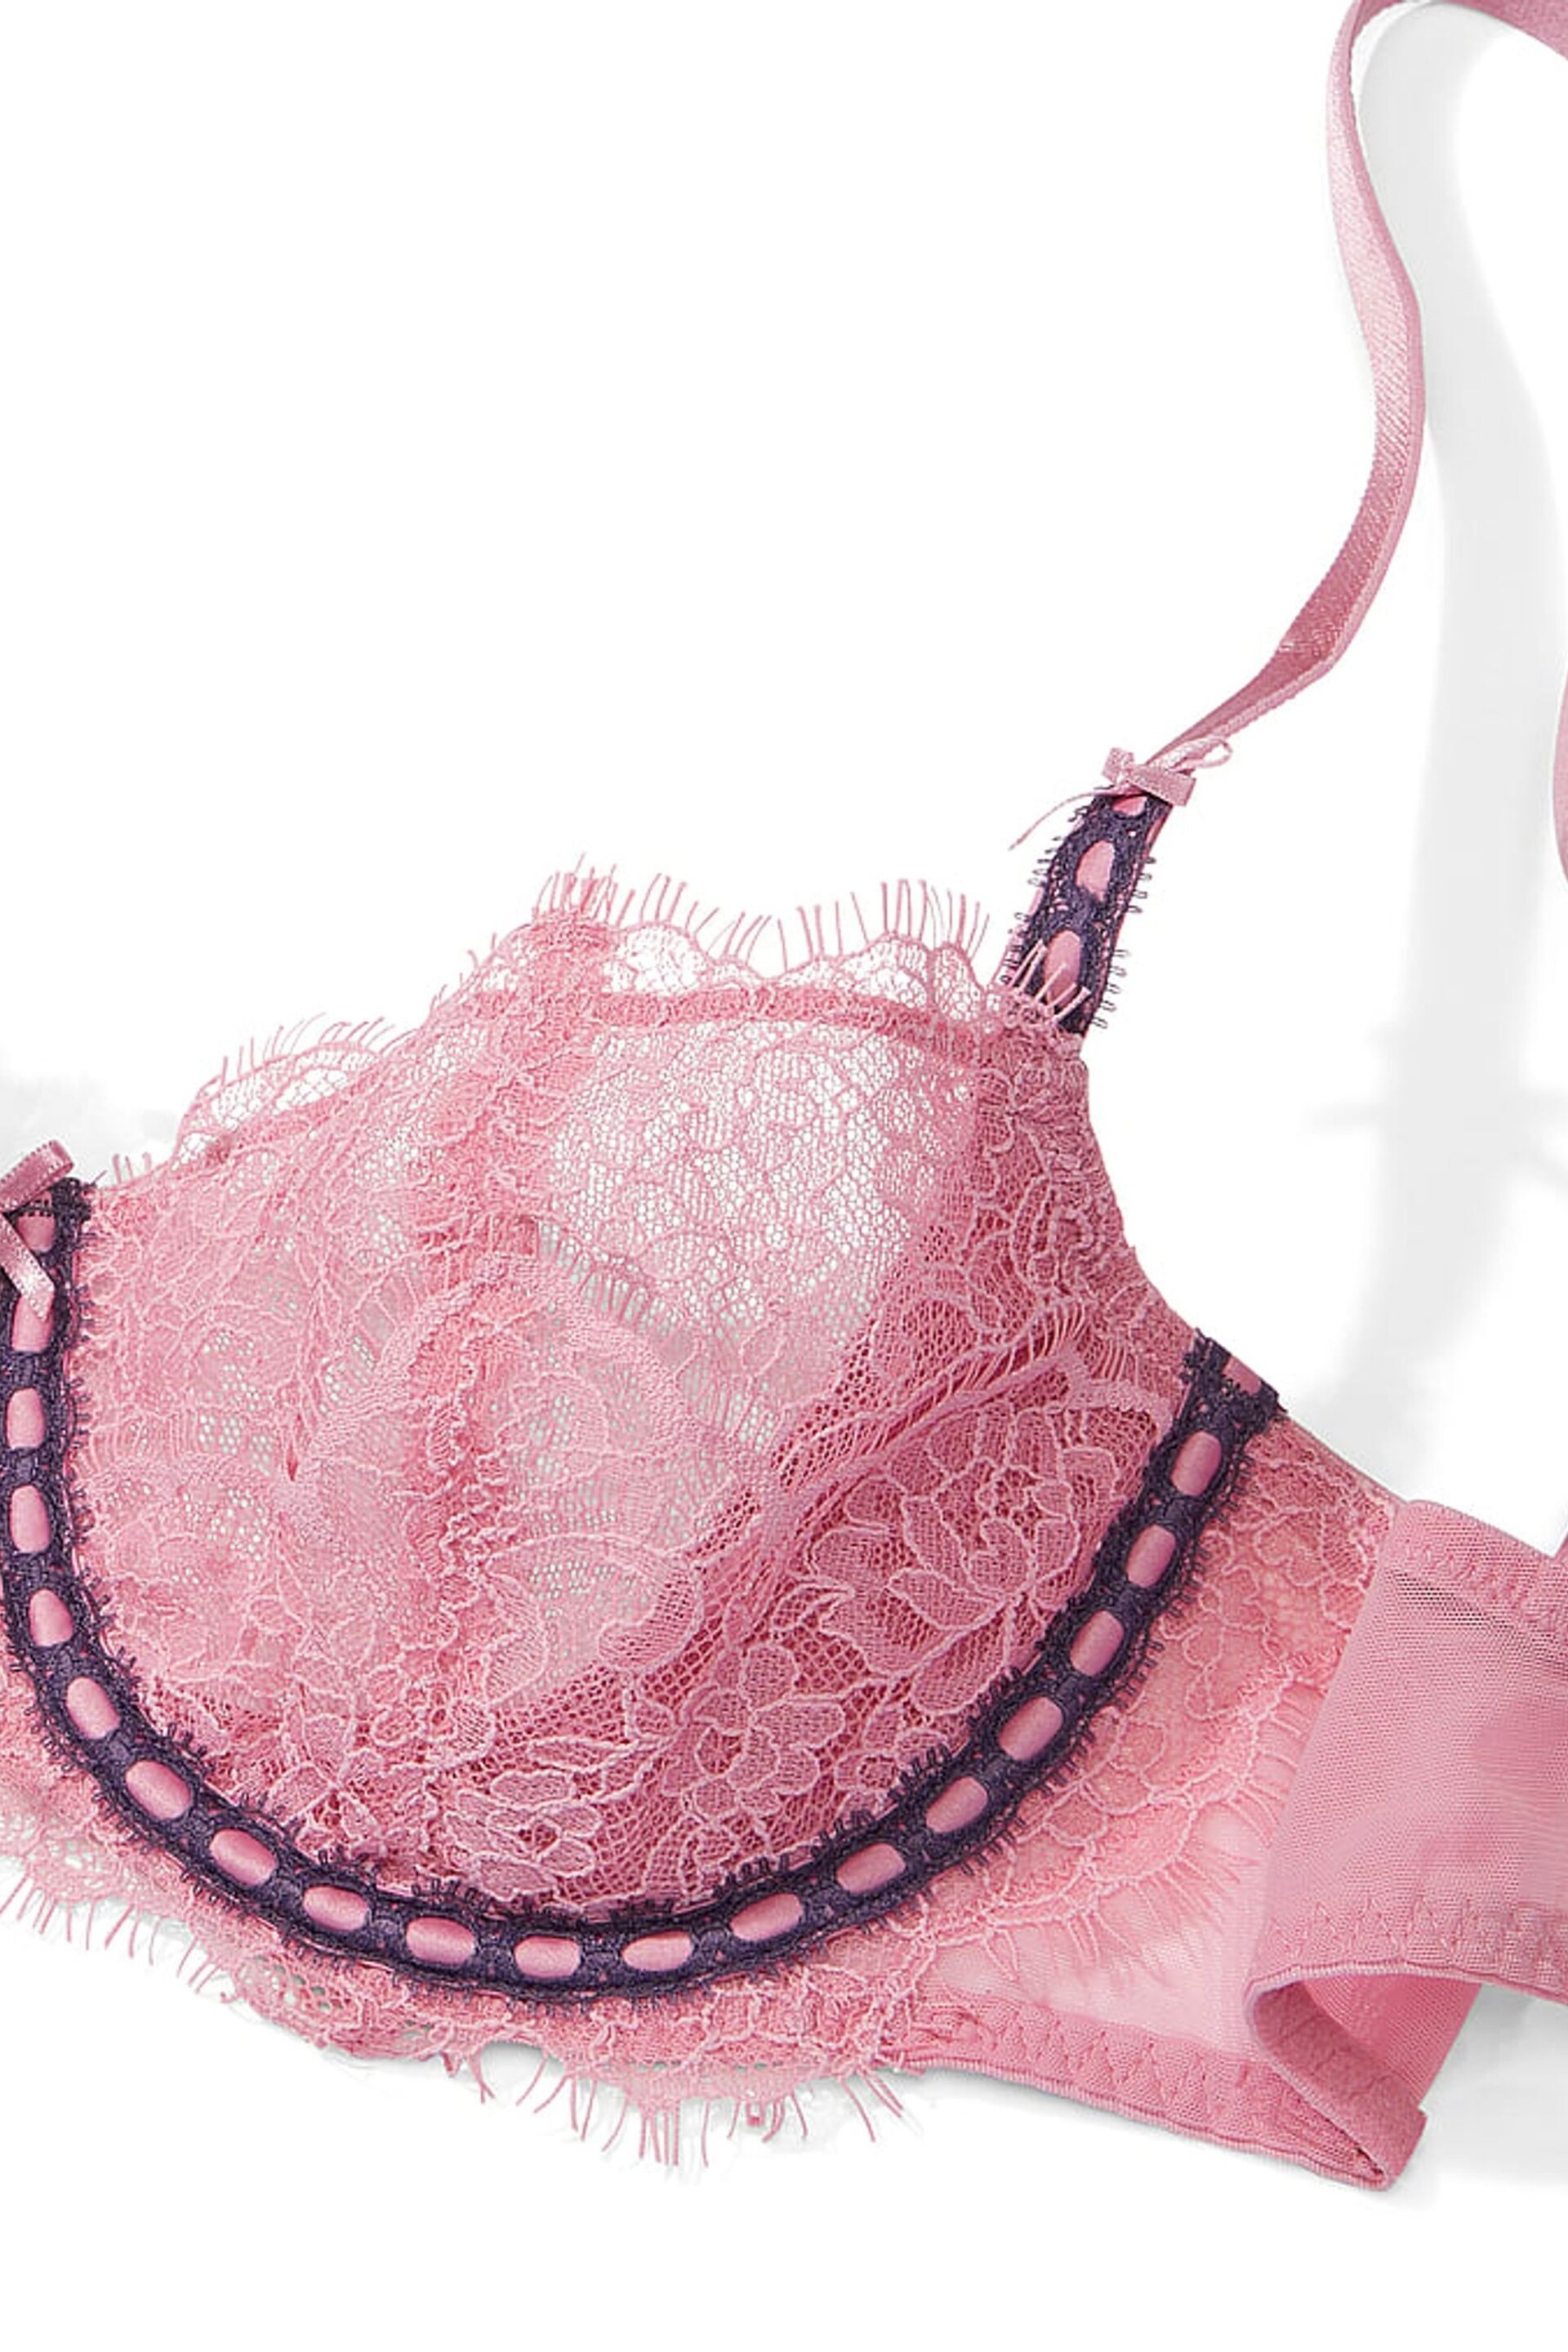 Victoria's Secret Dusk Mauve Pink Ribbon Slot Unlined Balcony Bra - Image 4 of 4